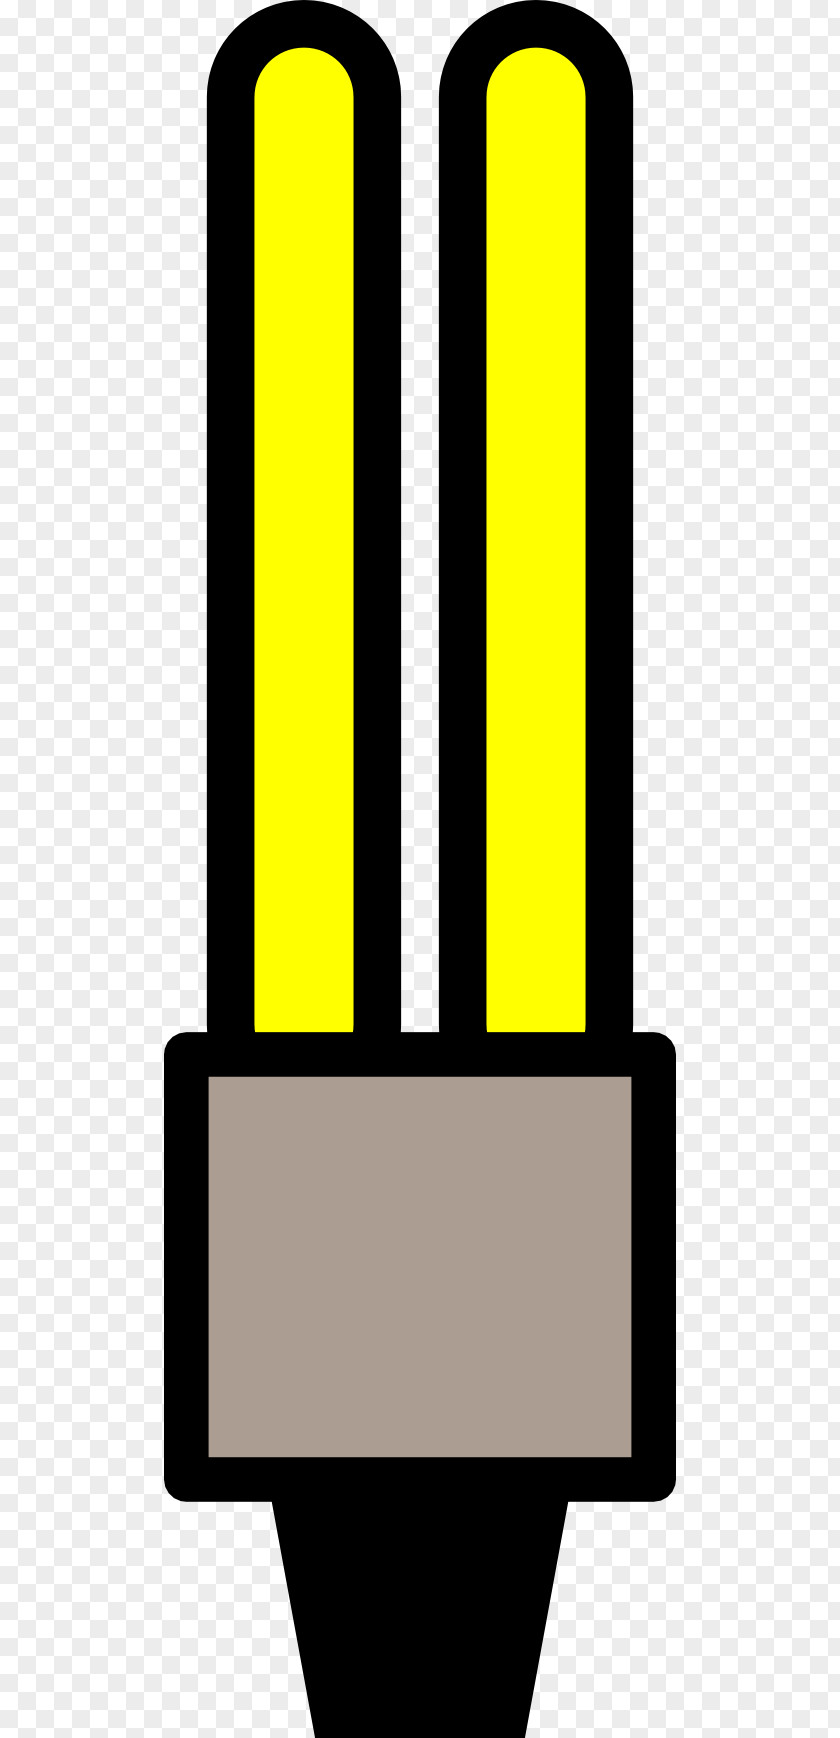 Energie Incandescent Light Bulb Compact Fluorescent Lamp Clip Art PNG